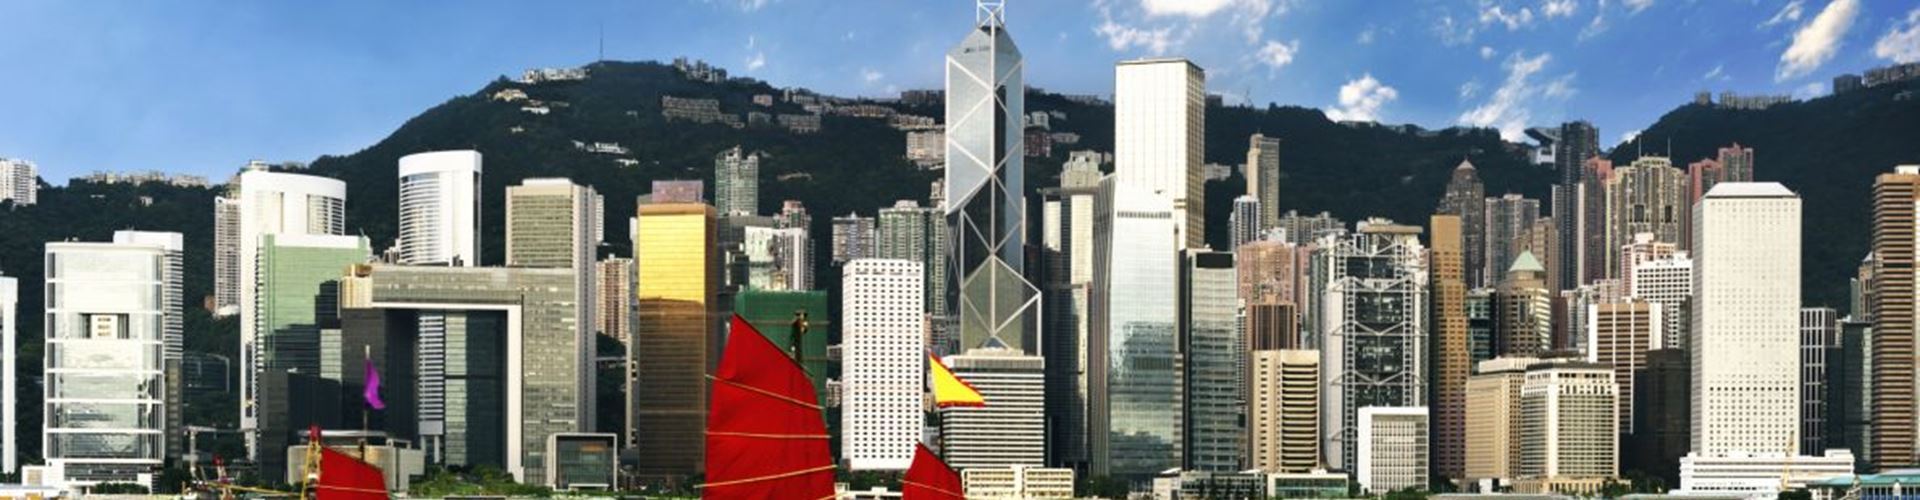 Hong Kong raises $1 billion through Islamic bonds